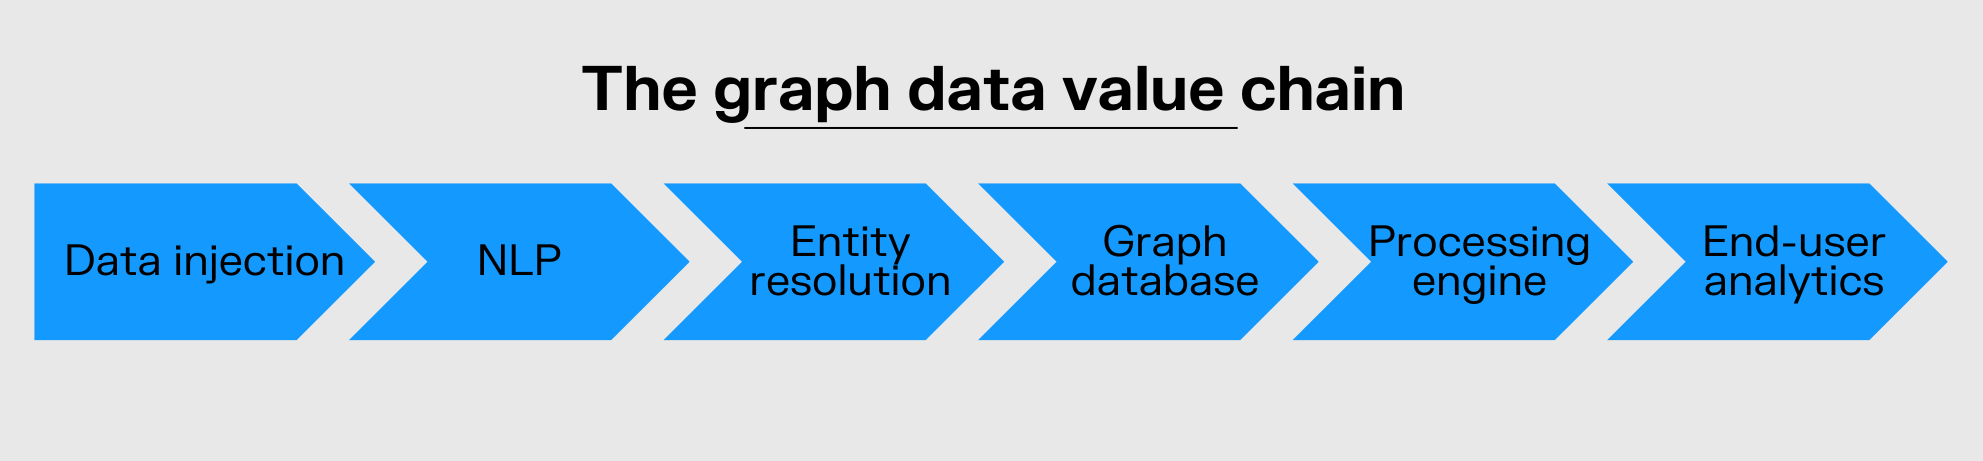 the graph data value chain